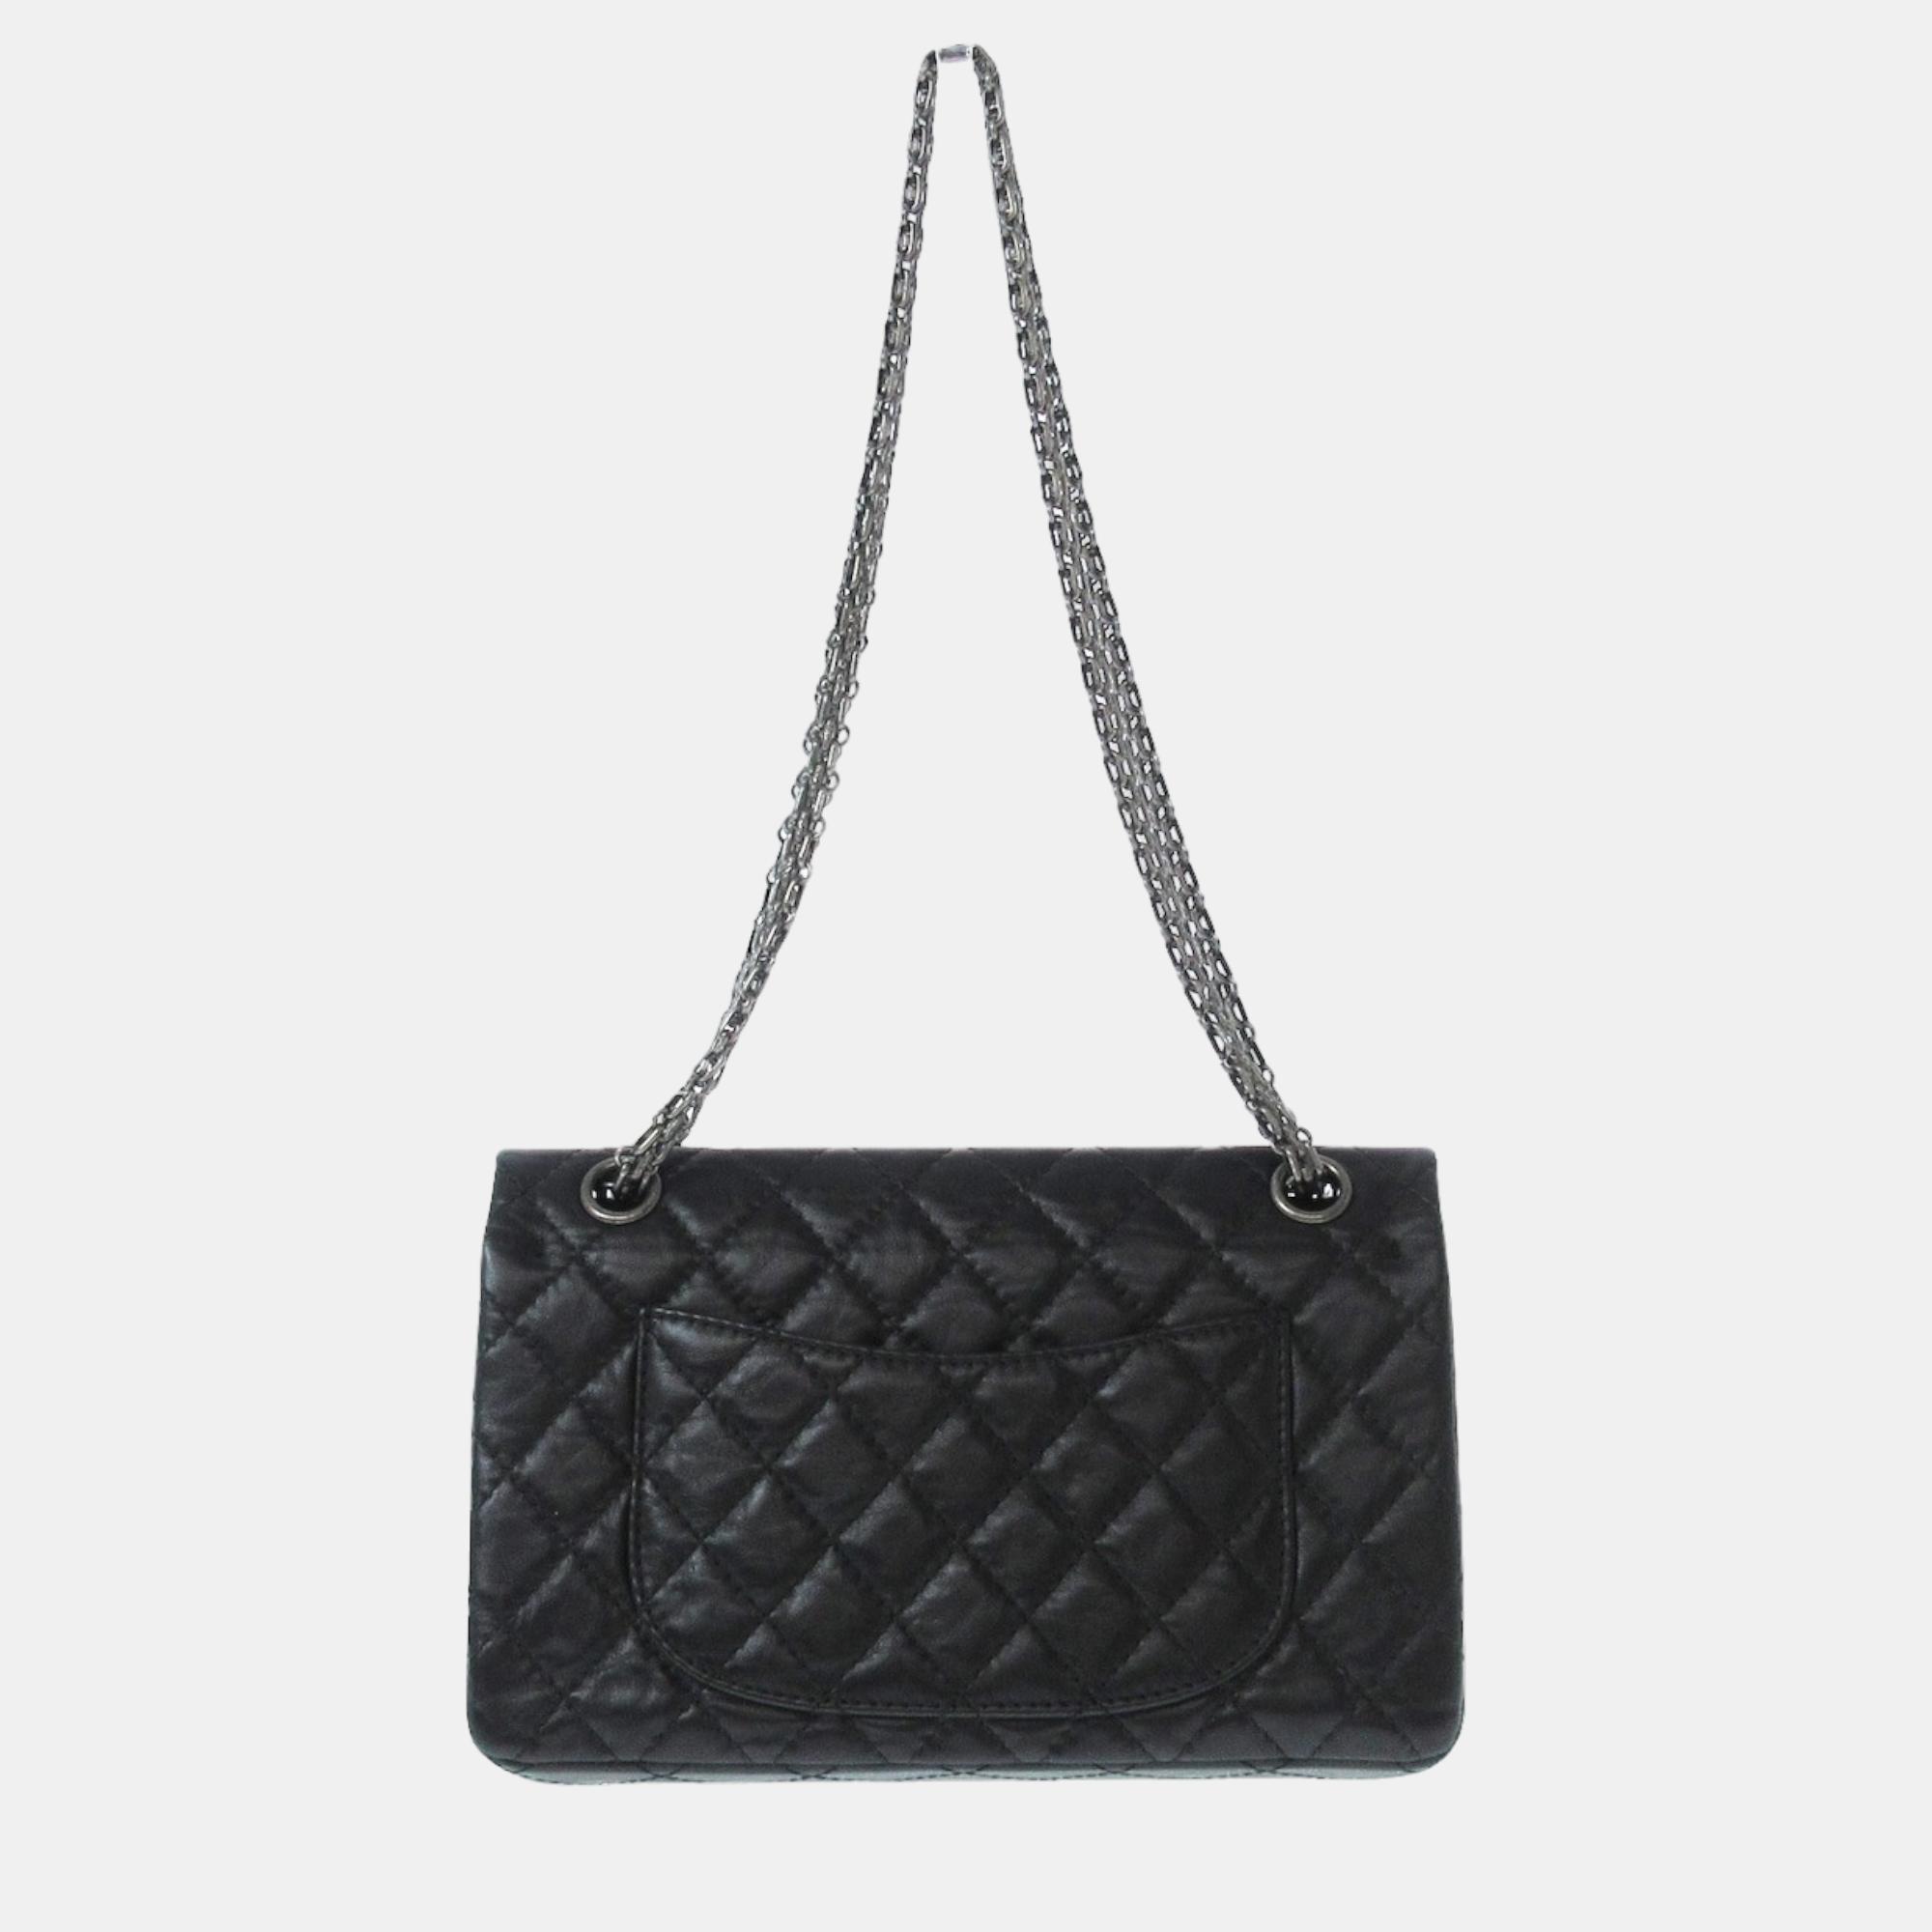 Chanel Black Leather Flap bag Chanel